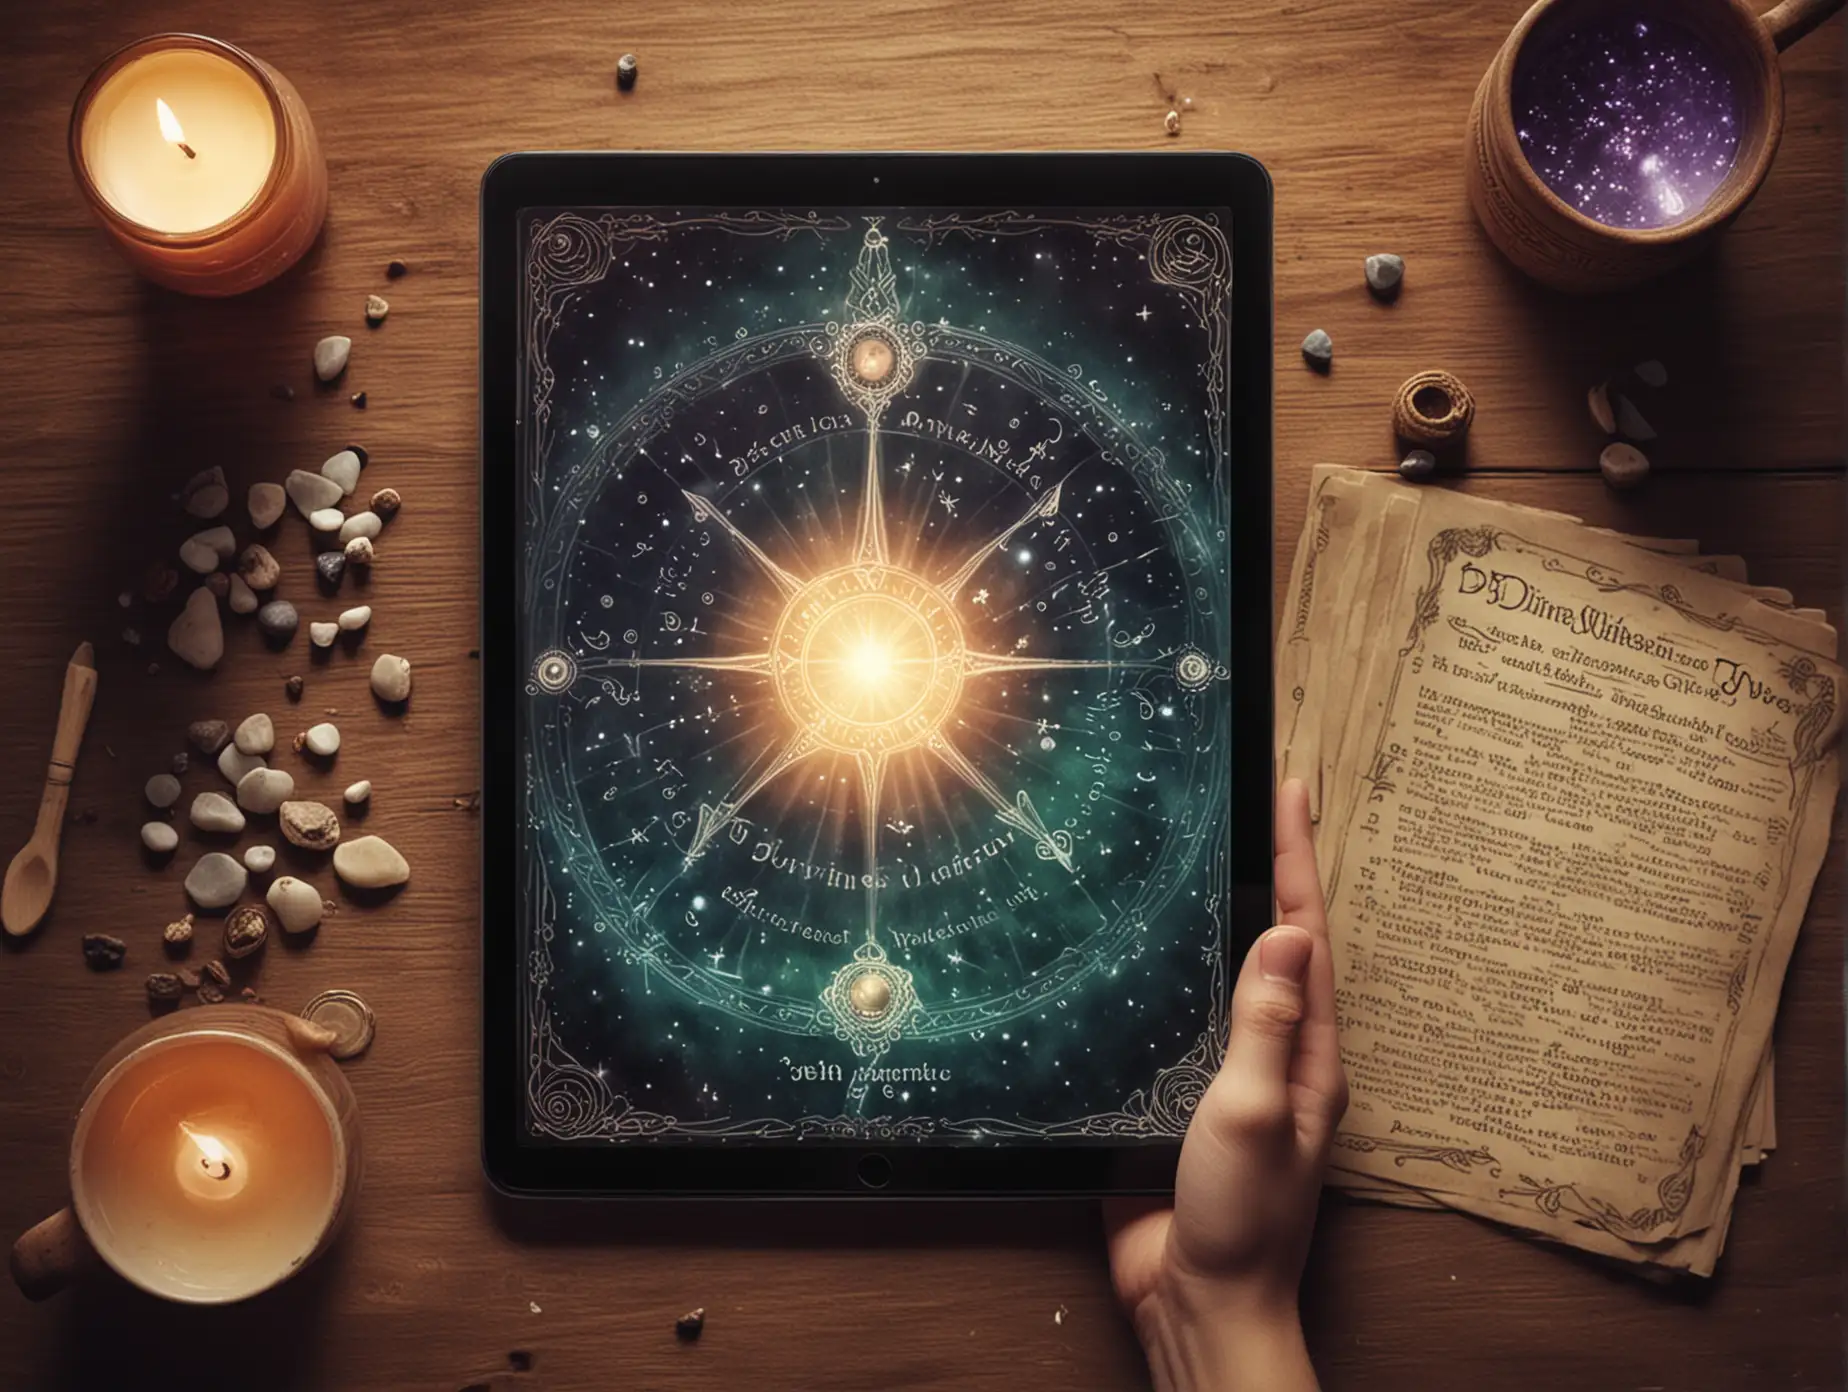 Promotional poster for divination app